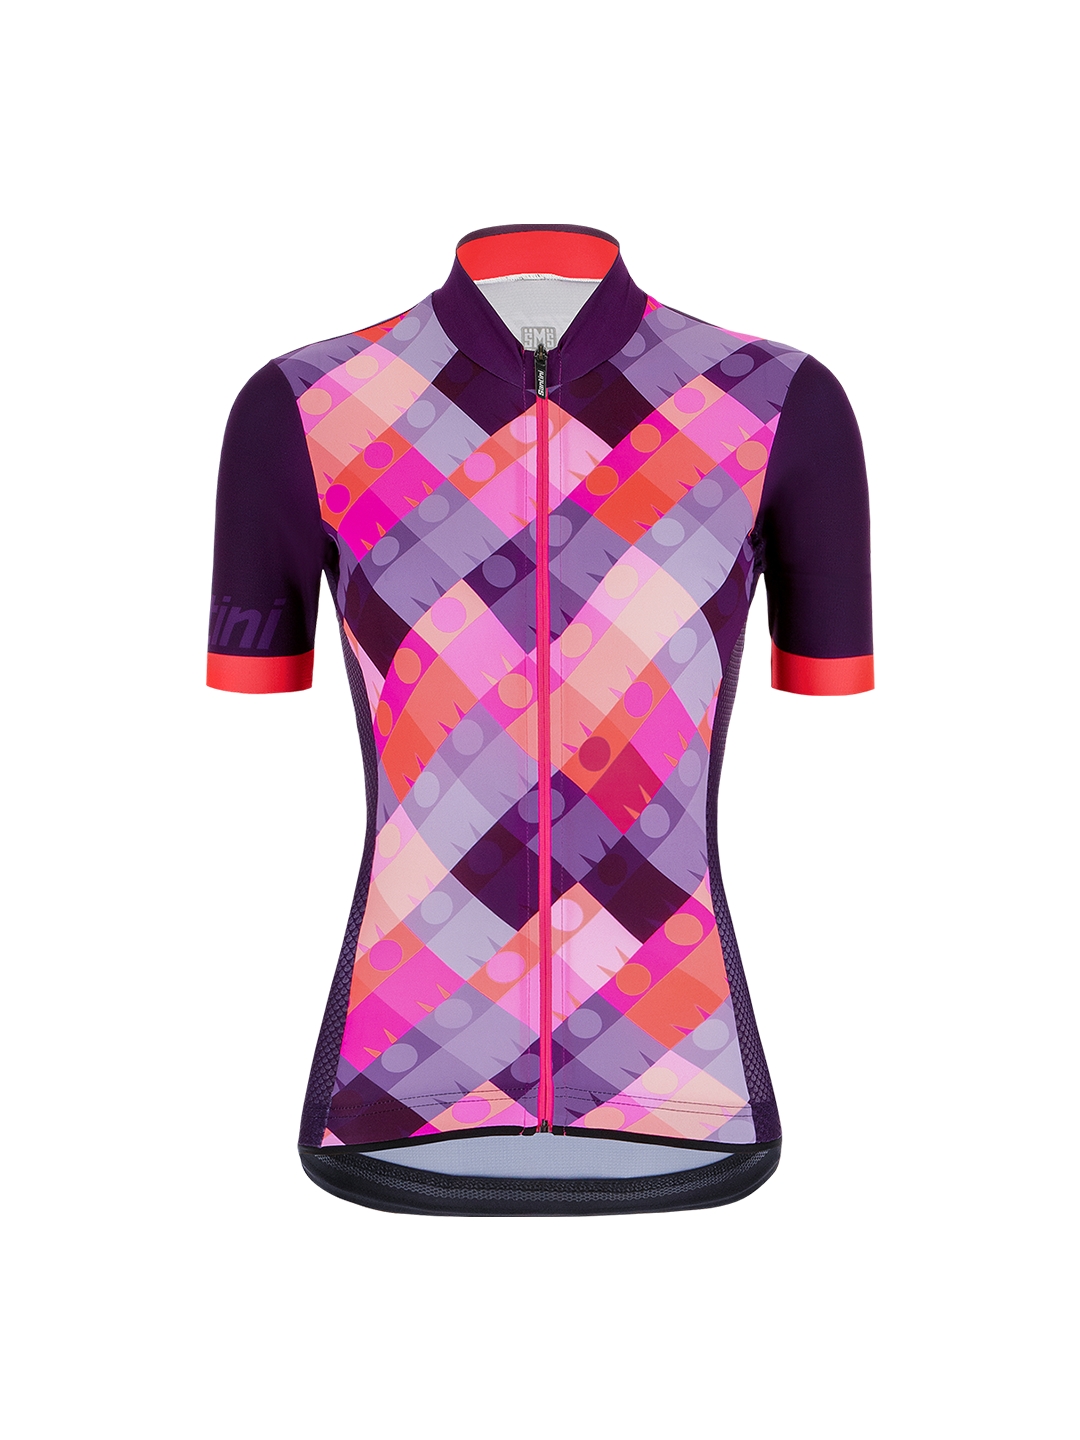 women's cycling shirts on sale